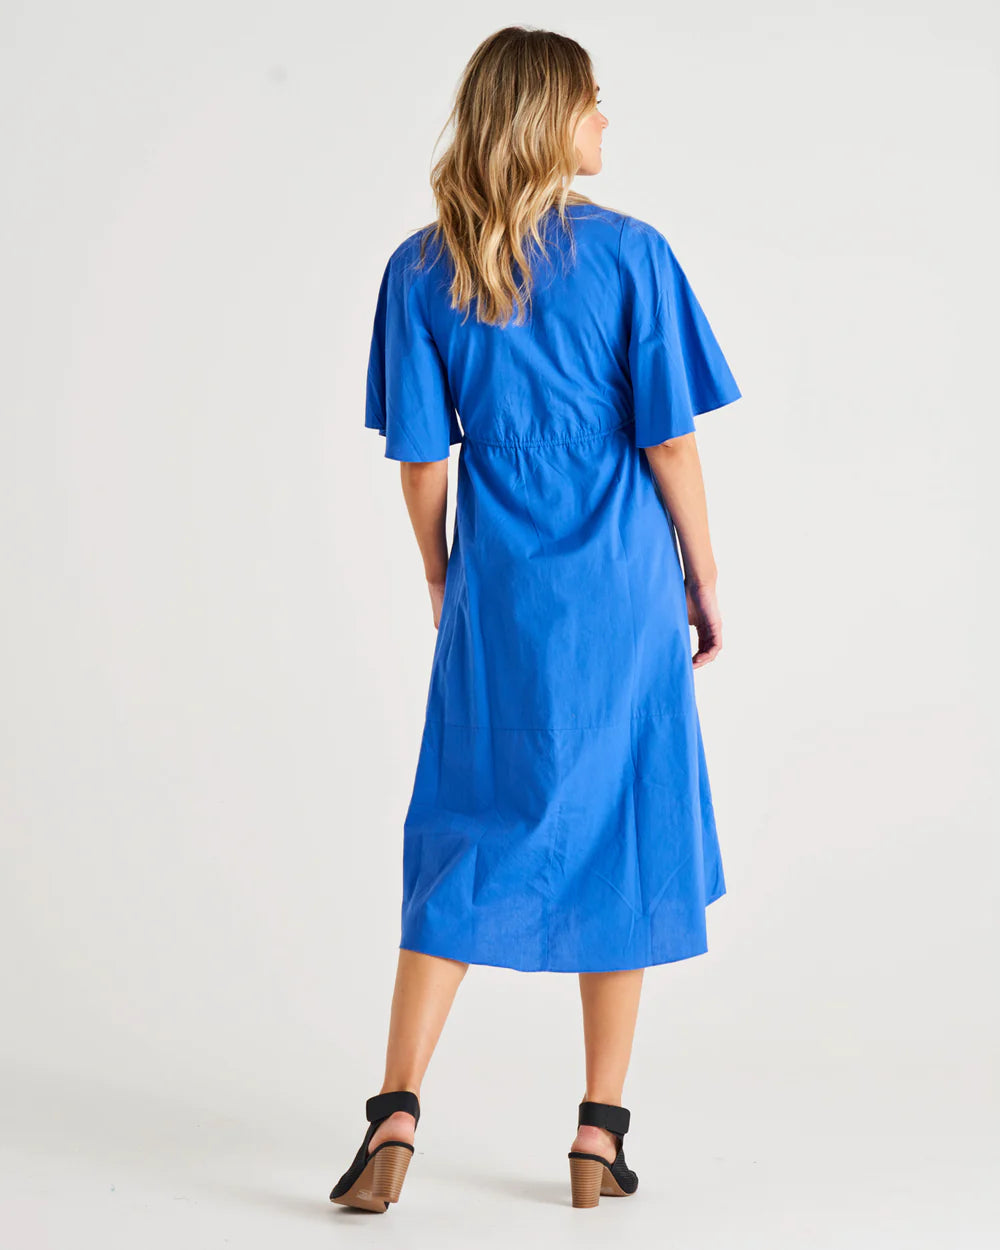 BETTY BASICS CORA DRESS IRIS BLUE